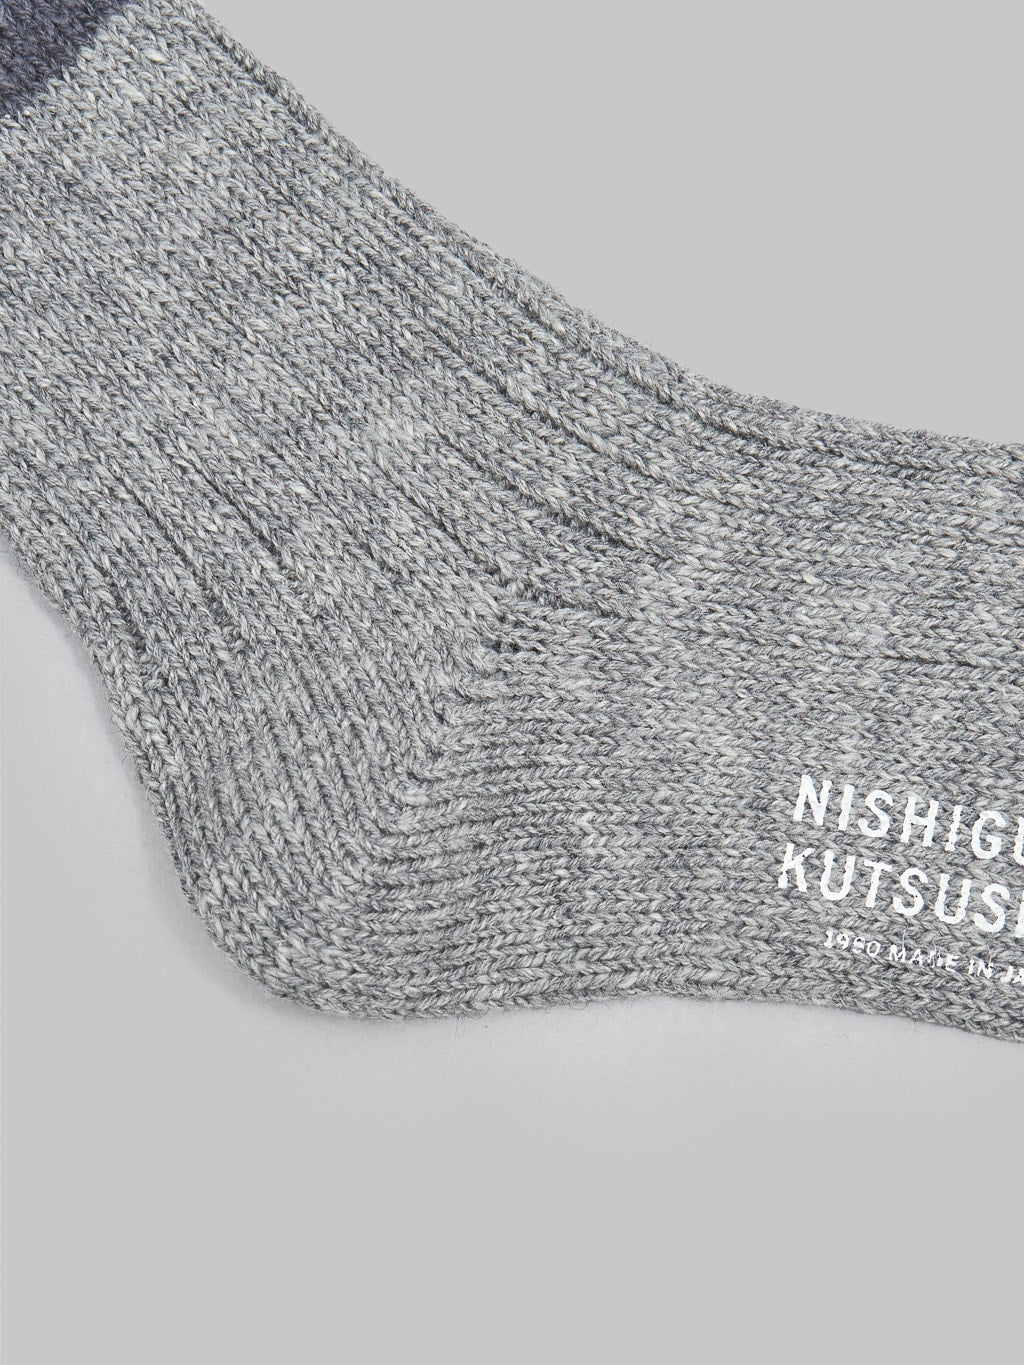 Nishiguchi Kutsushita Wool Cotton Socks Charcoal Heel